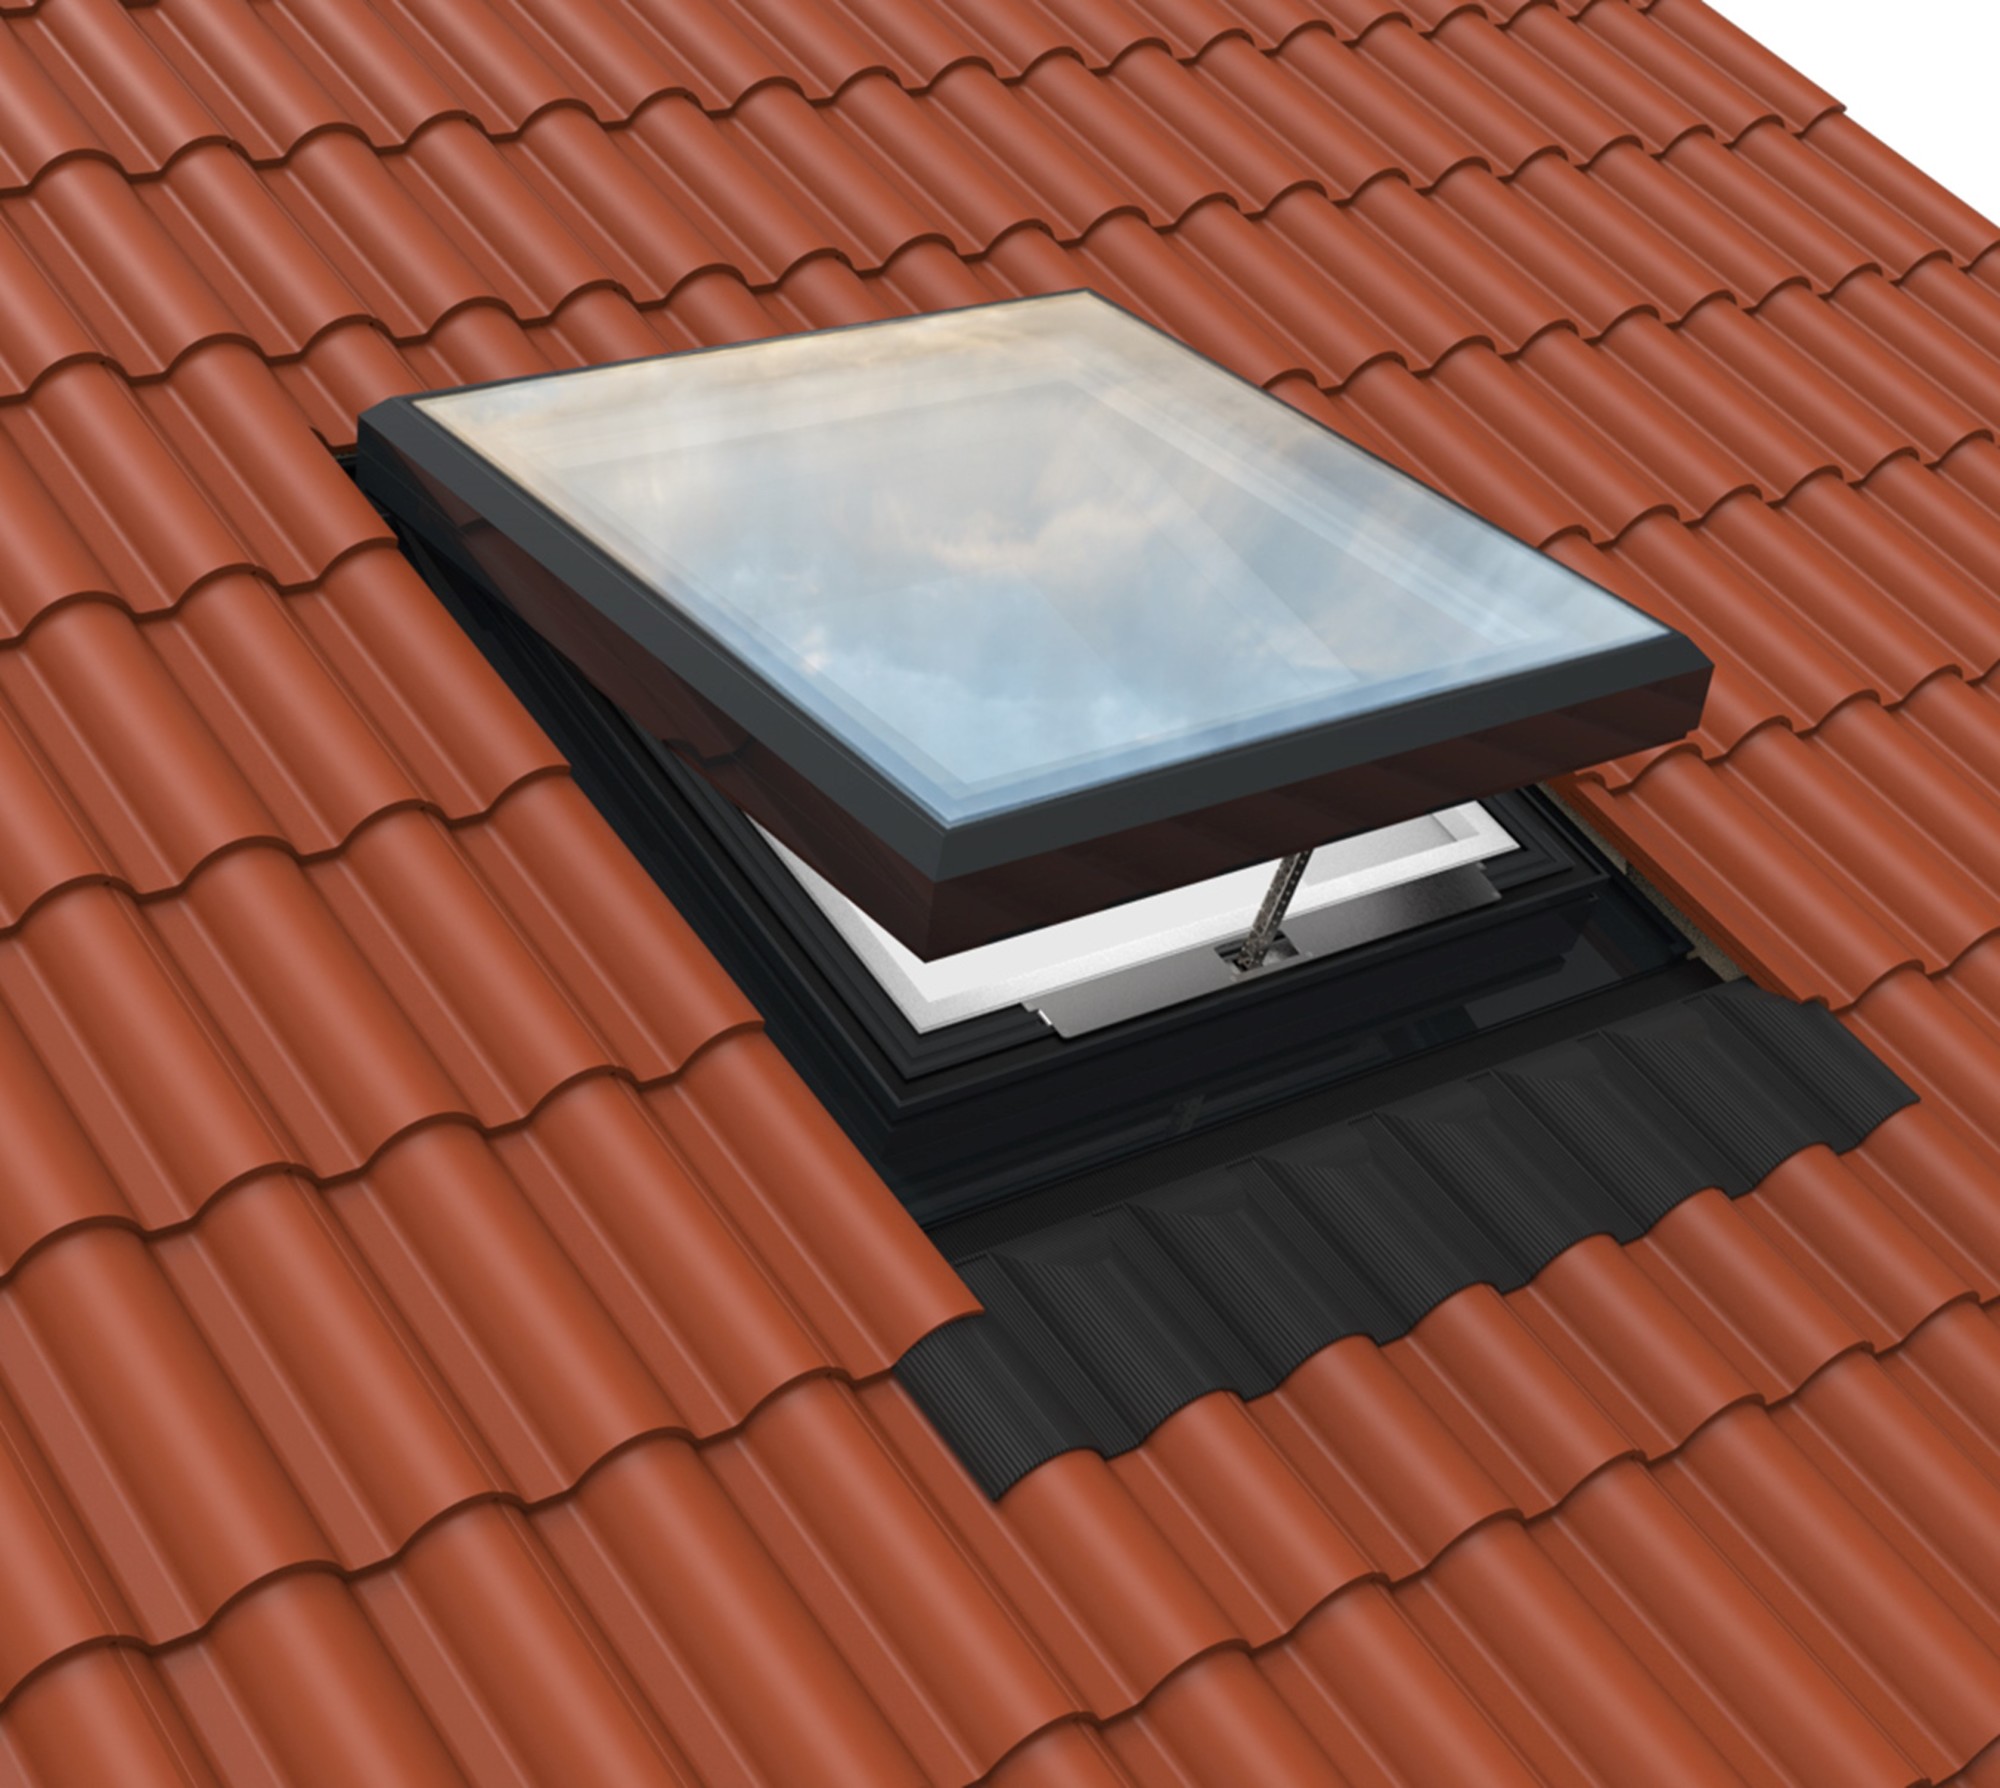 A rooflight